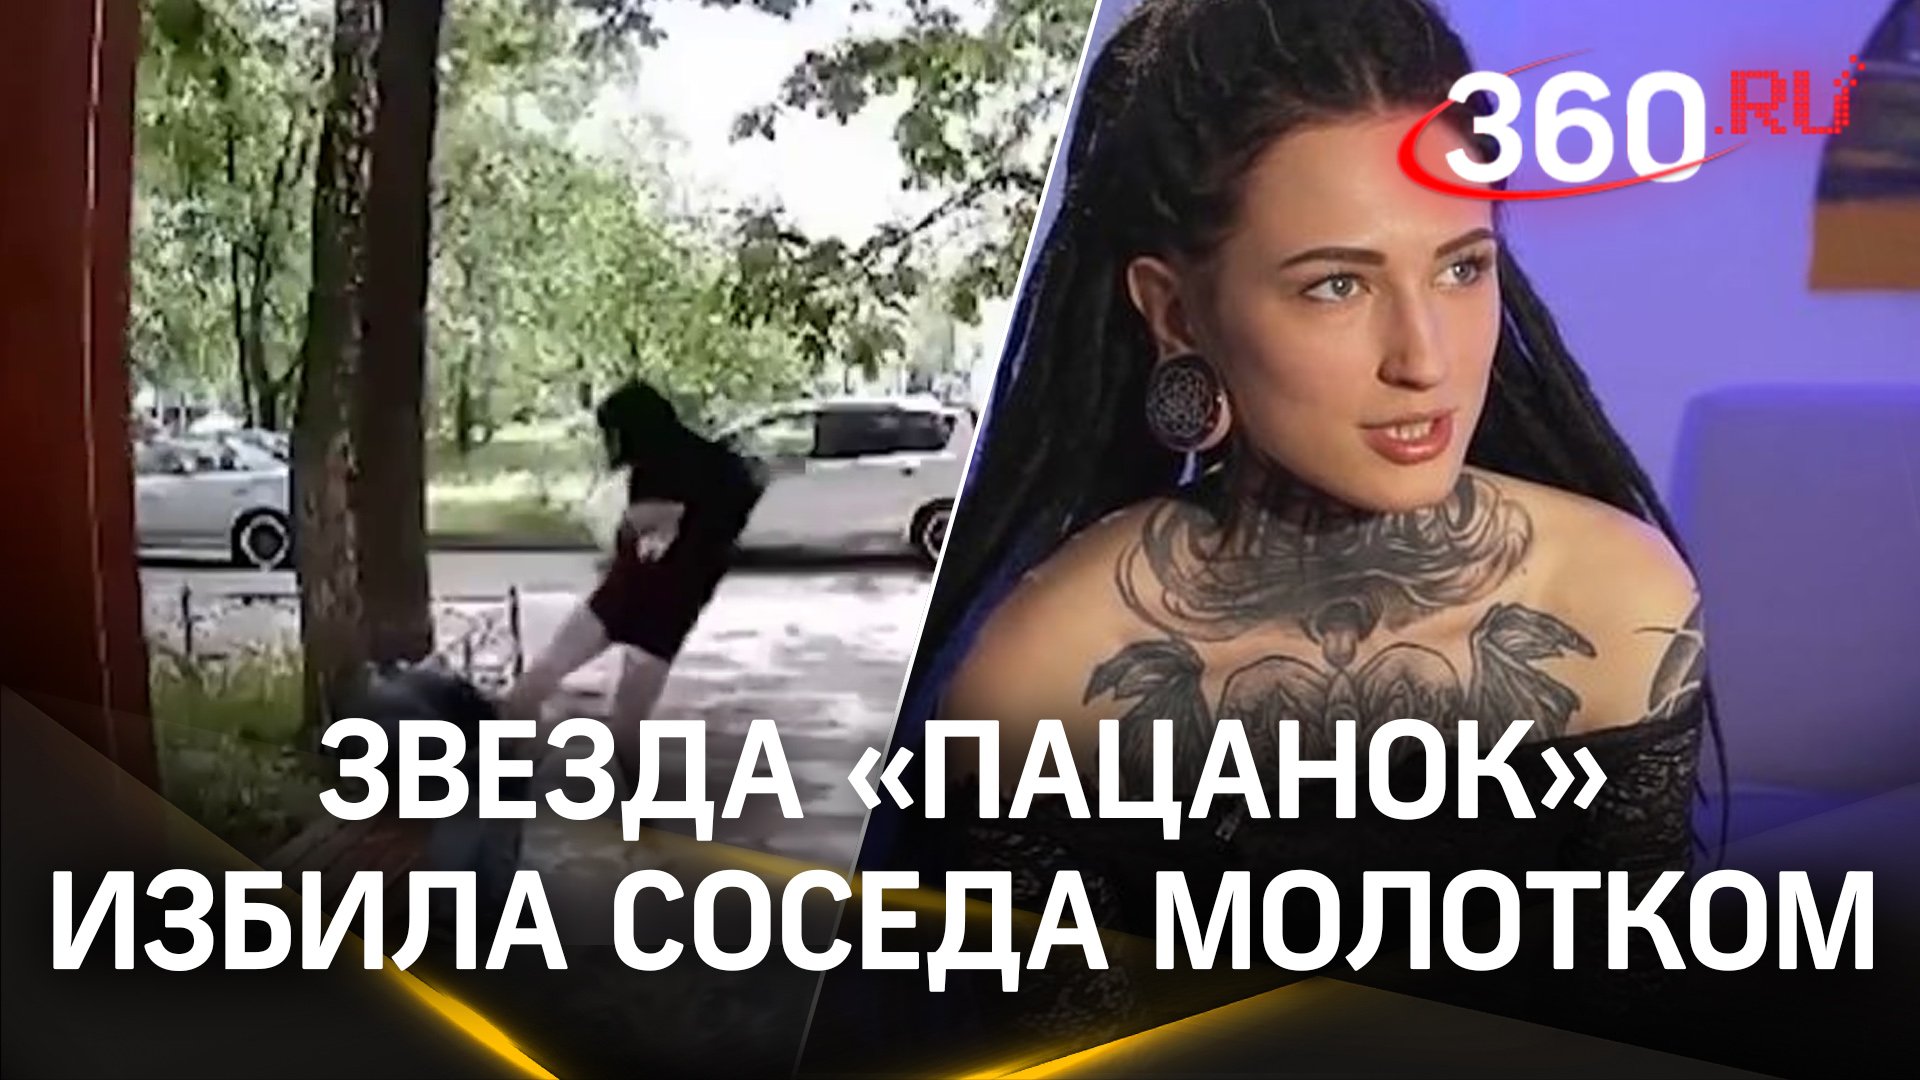 Участница шоу «Пацанки» Александра Петрова избила молотком соседа, который шумел под окнами